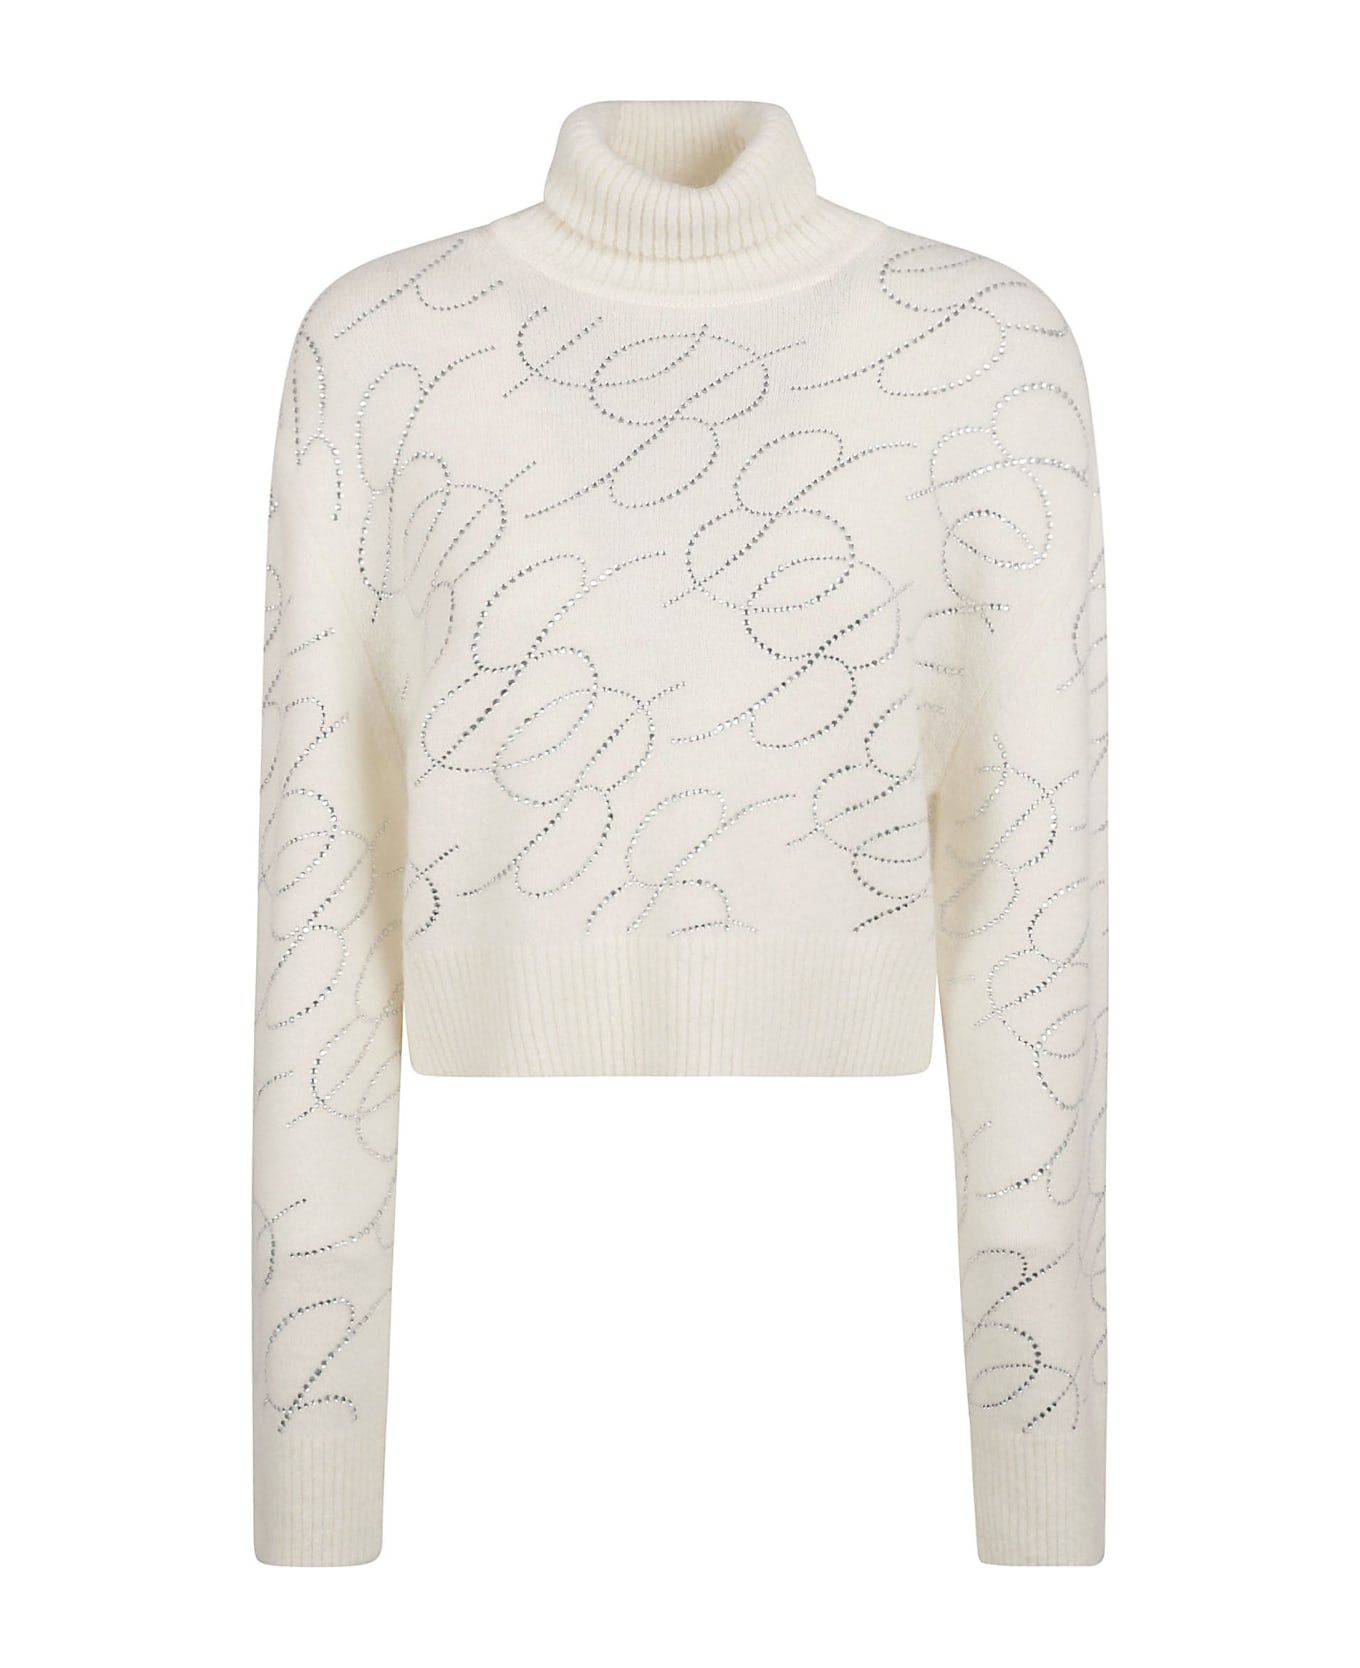 Blumarine Roll Neck Embellished Knit Sweater - White/Natural